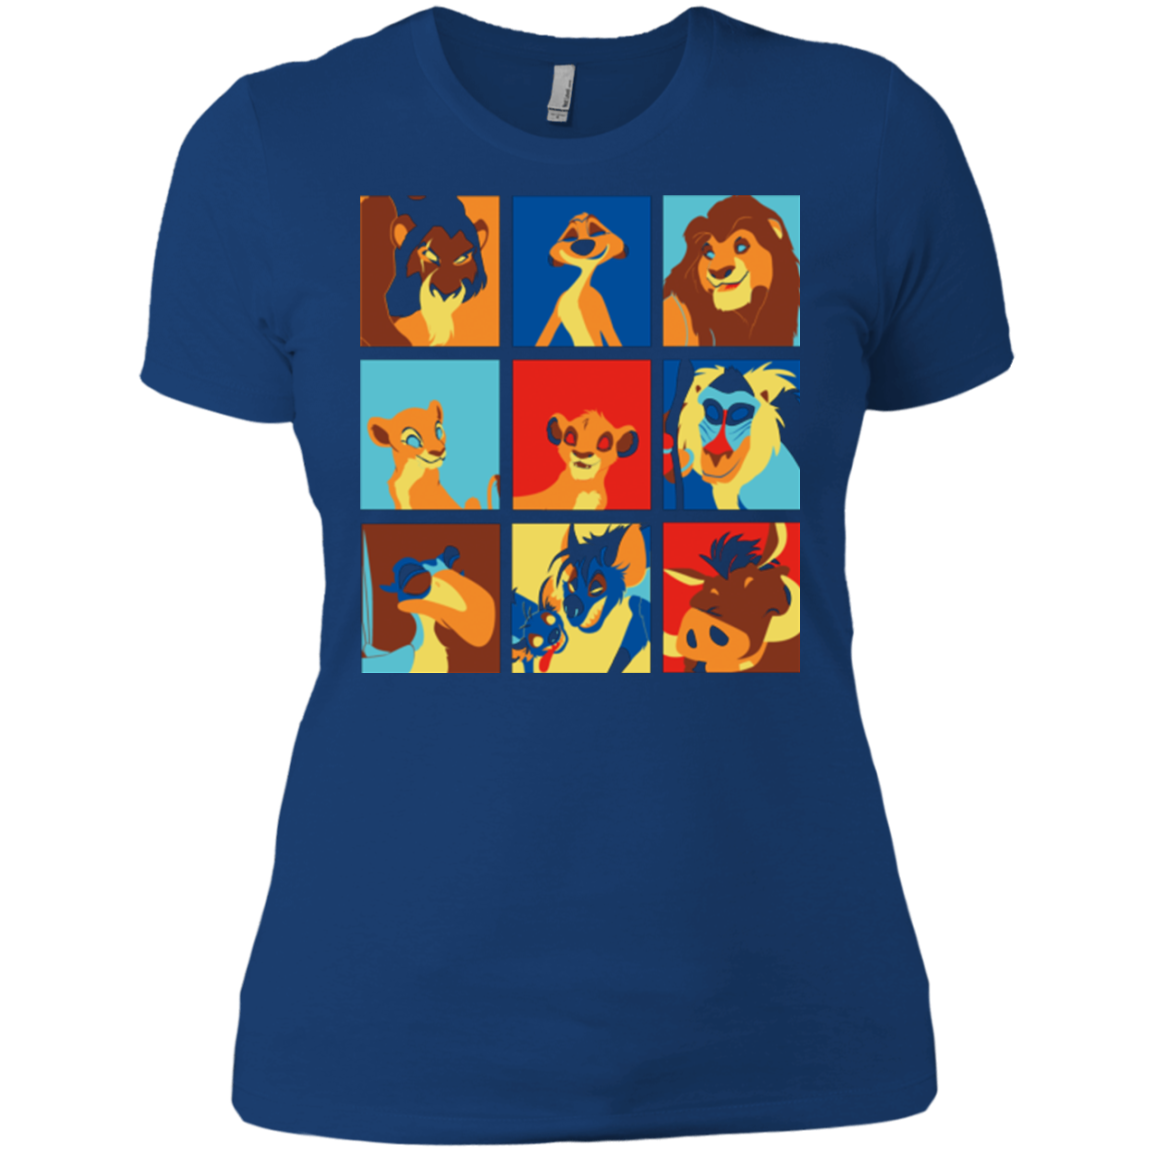 Lion Pop Women's Premium T-Shirt